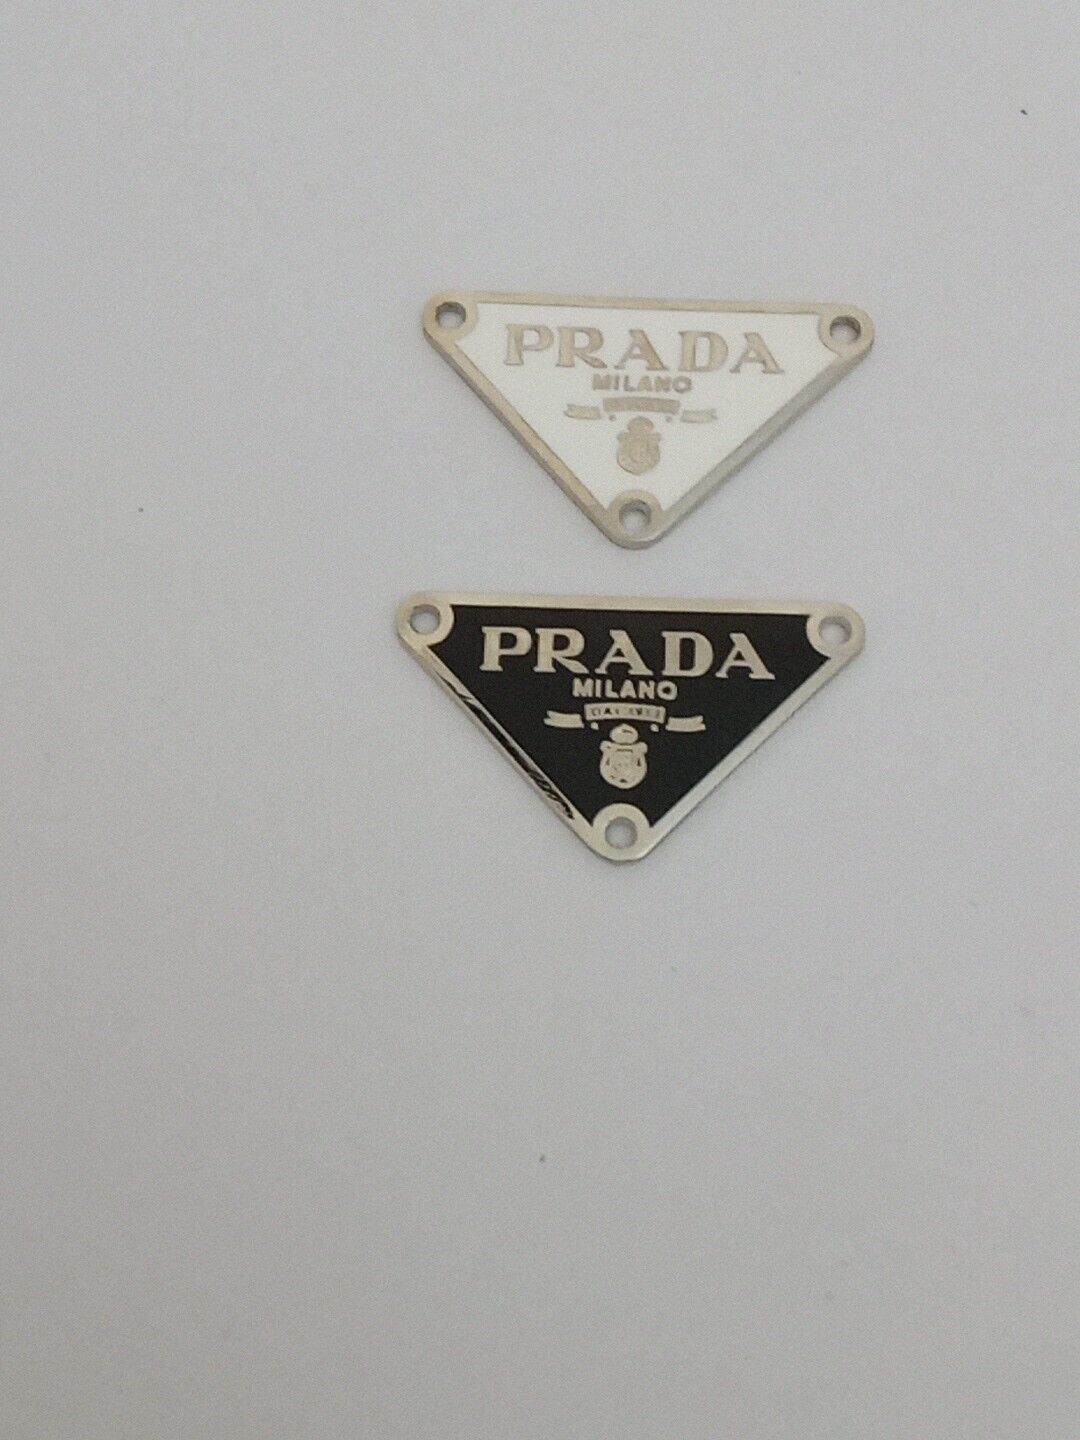 2 Pieces 38mm Prada Logo Triangle with trim  Silver tone Button  Zipperpull